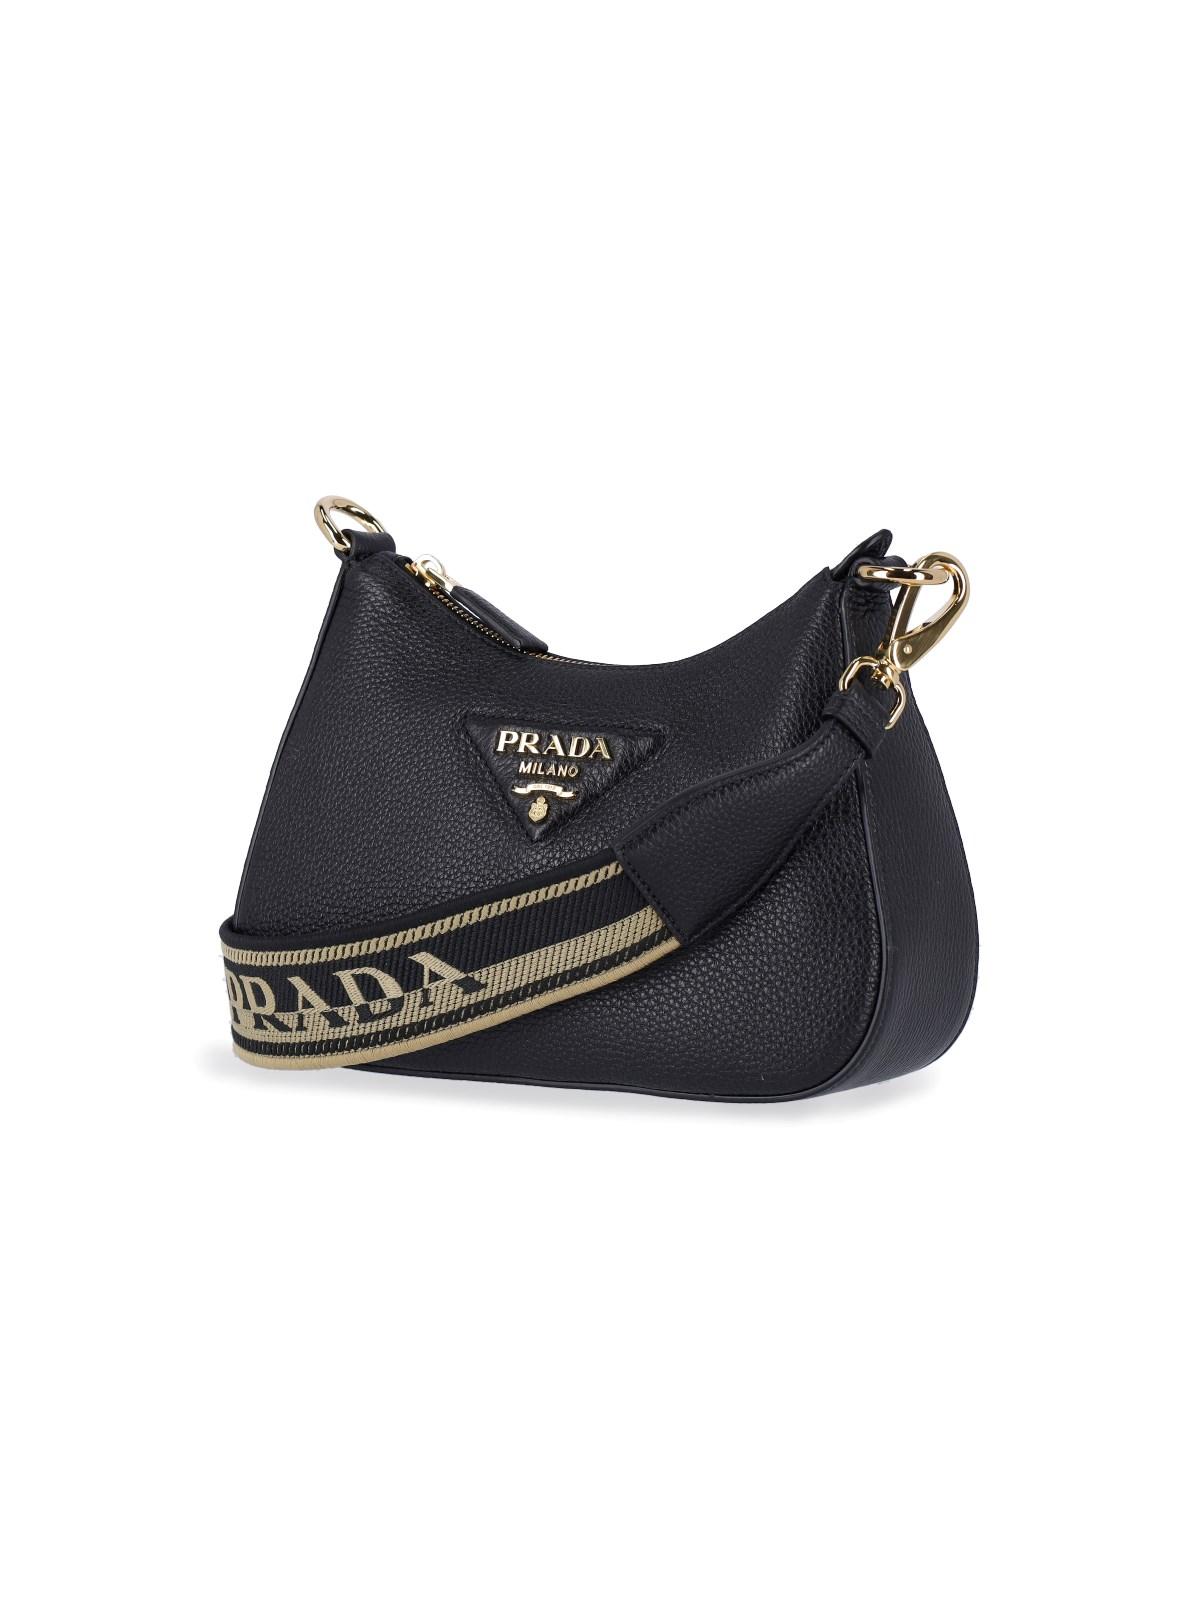 Prada Logo Shoulder Bag in Black | Lyst